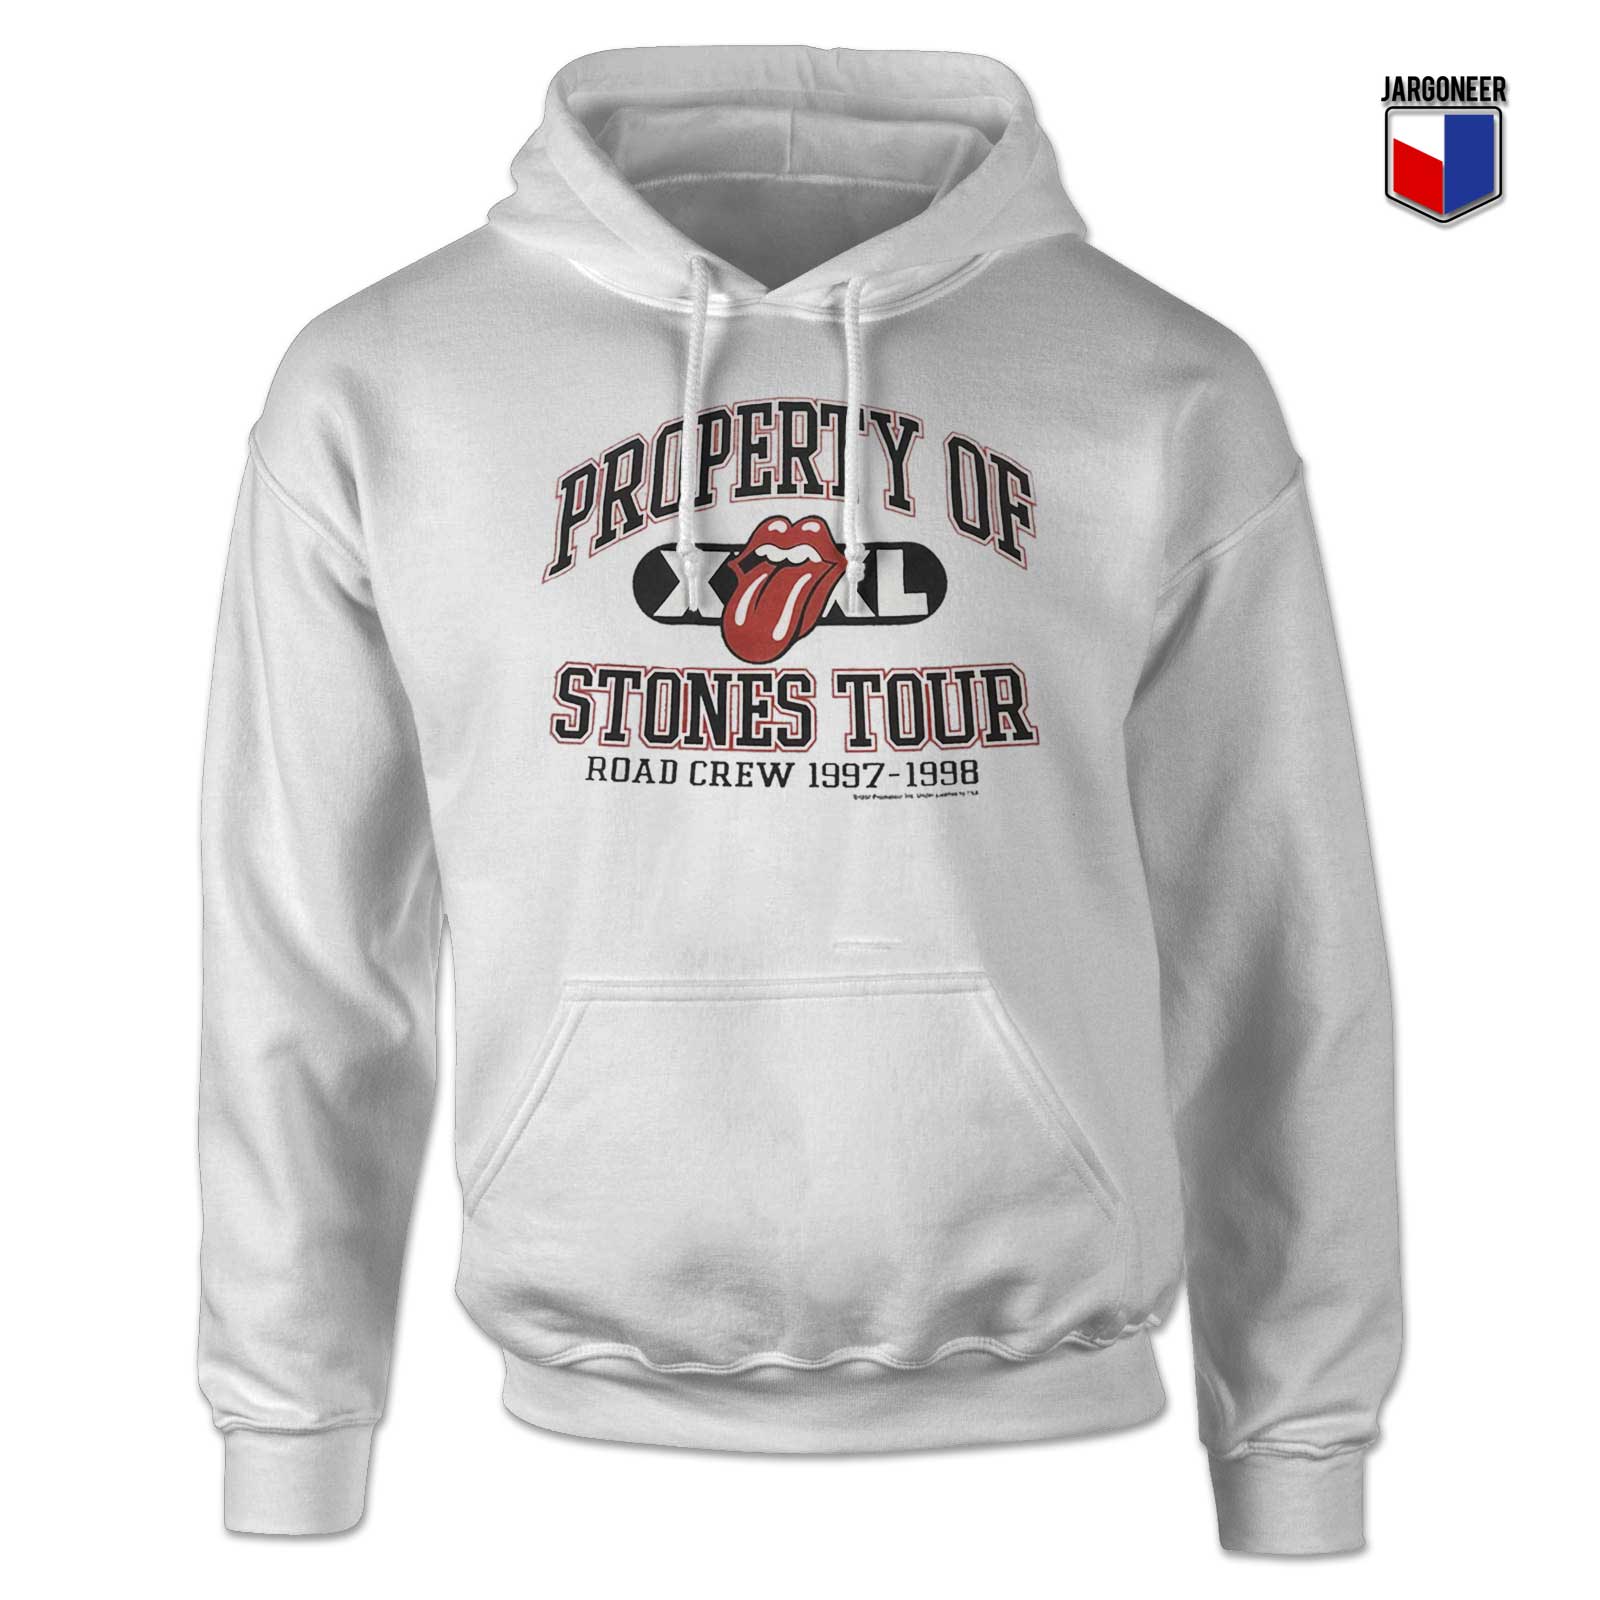 Property of Rolling Stones Tour Hoodie - Shop Unique Graphic Cool Shirt Designs